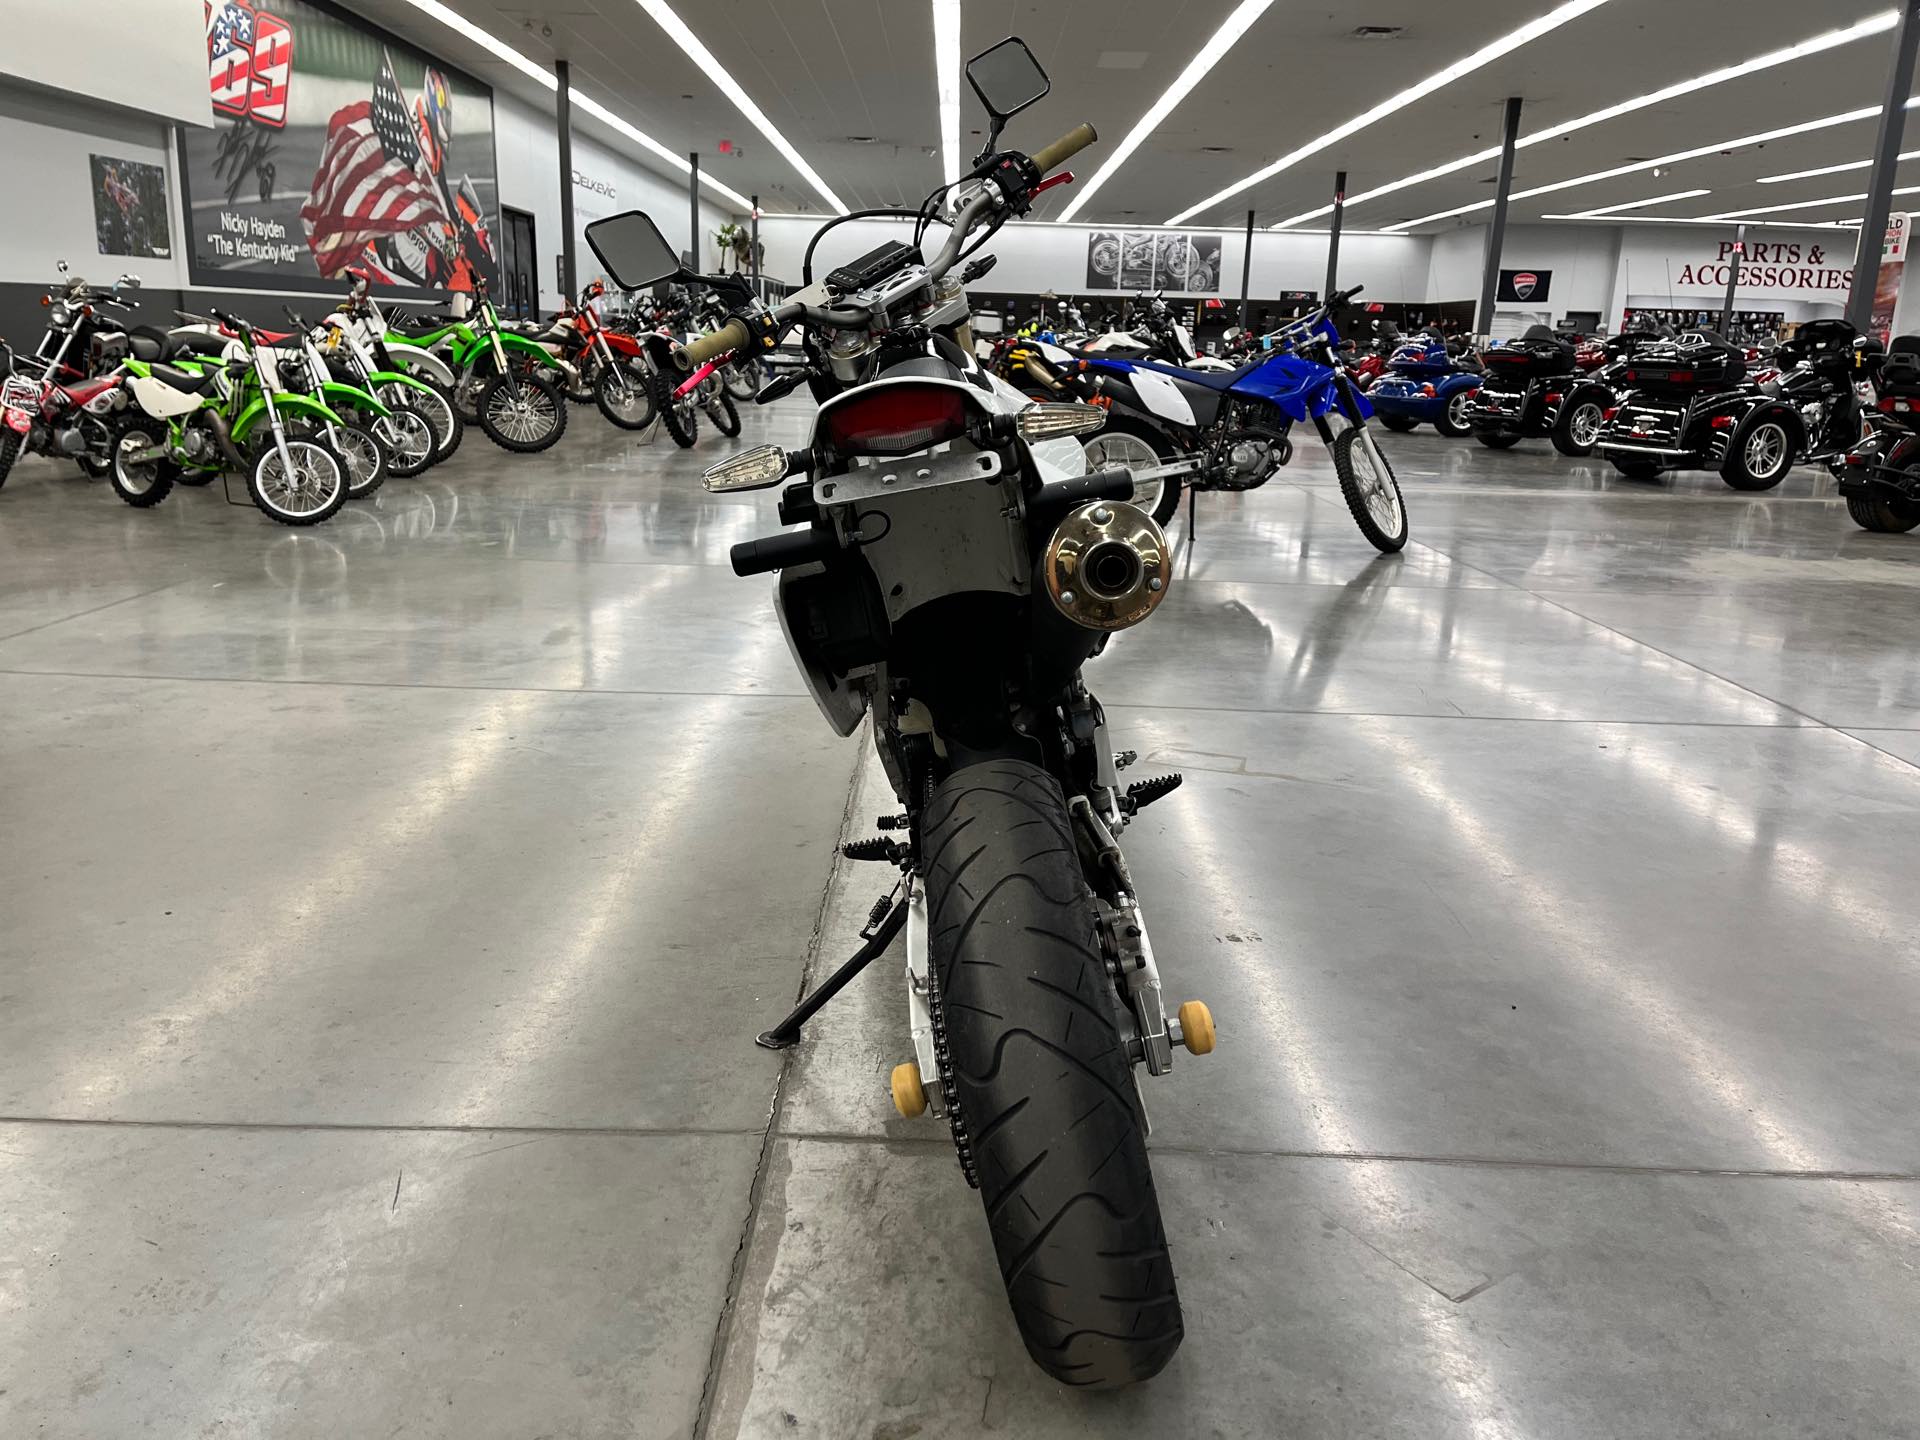 2013 Suzuki DR-Z 400SM Base at Aces Motorcycles - Denver